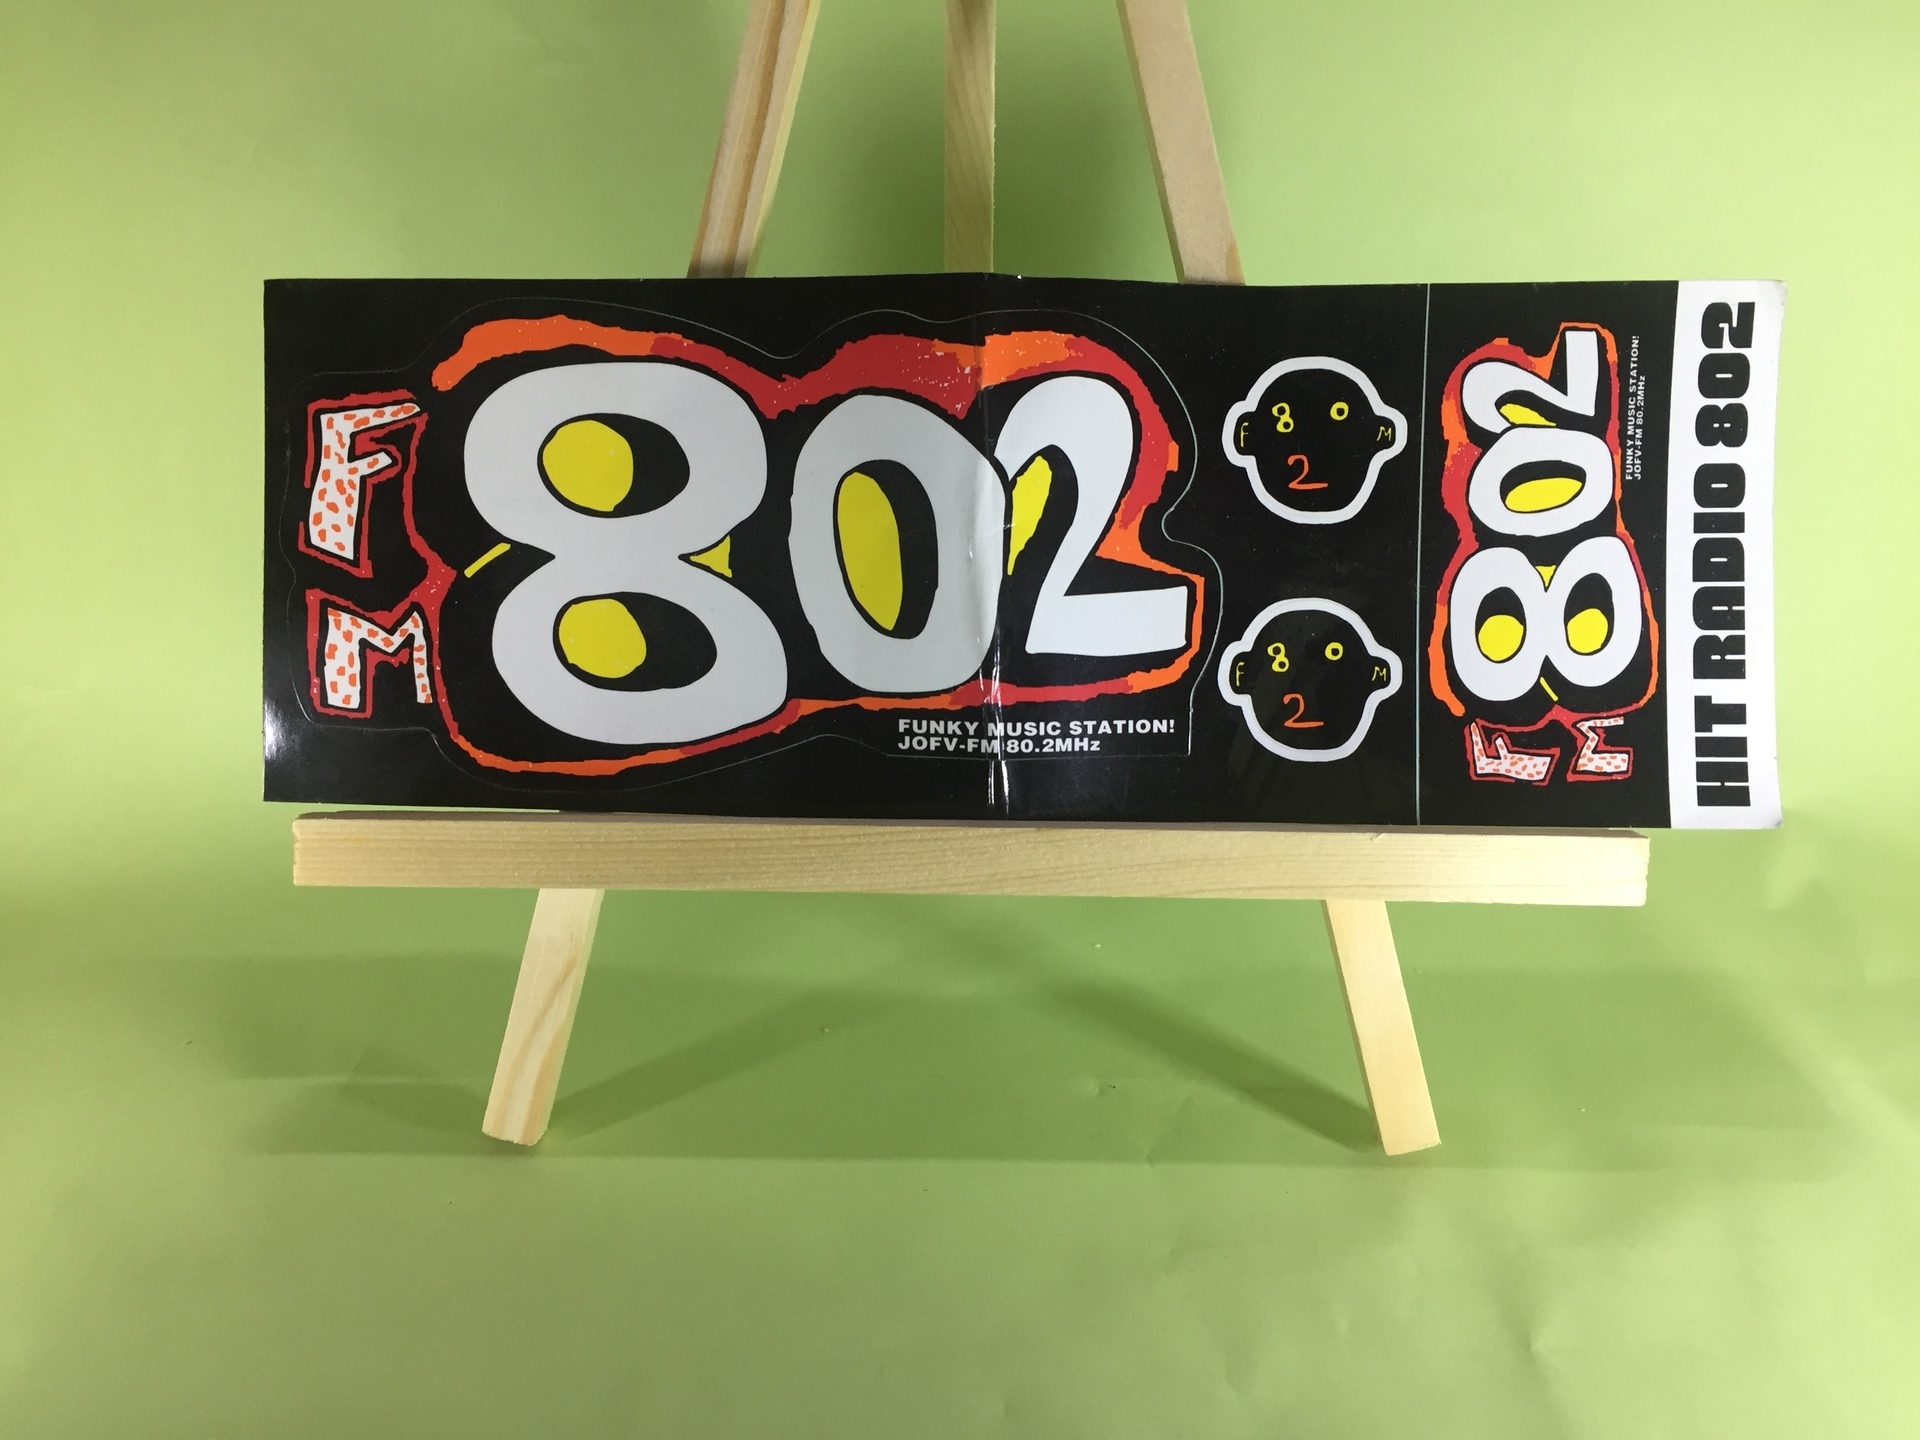 FM802（大阪）バンパーステッカー 物品 - コレクション